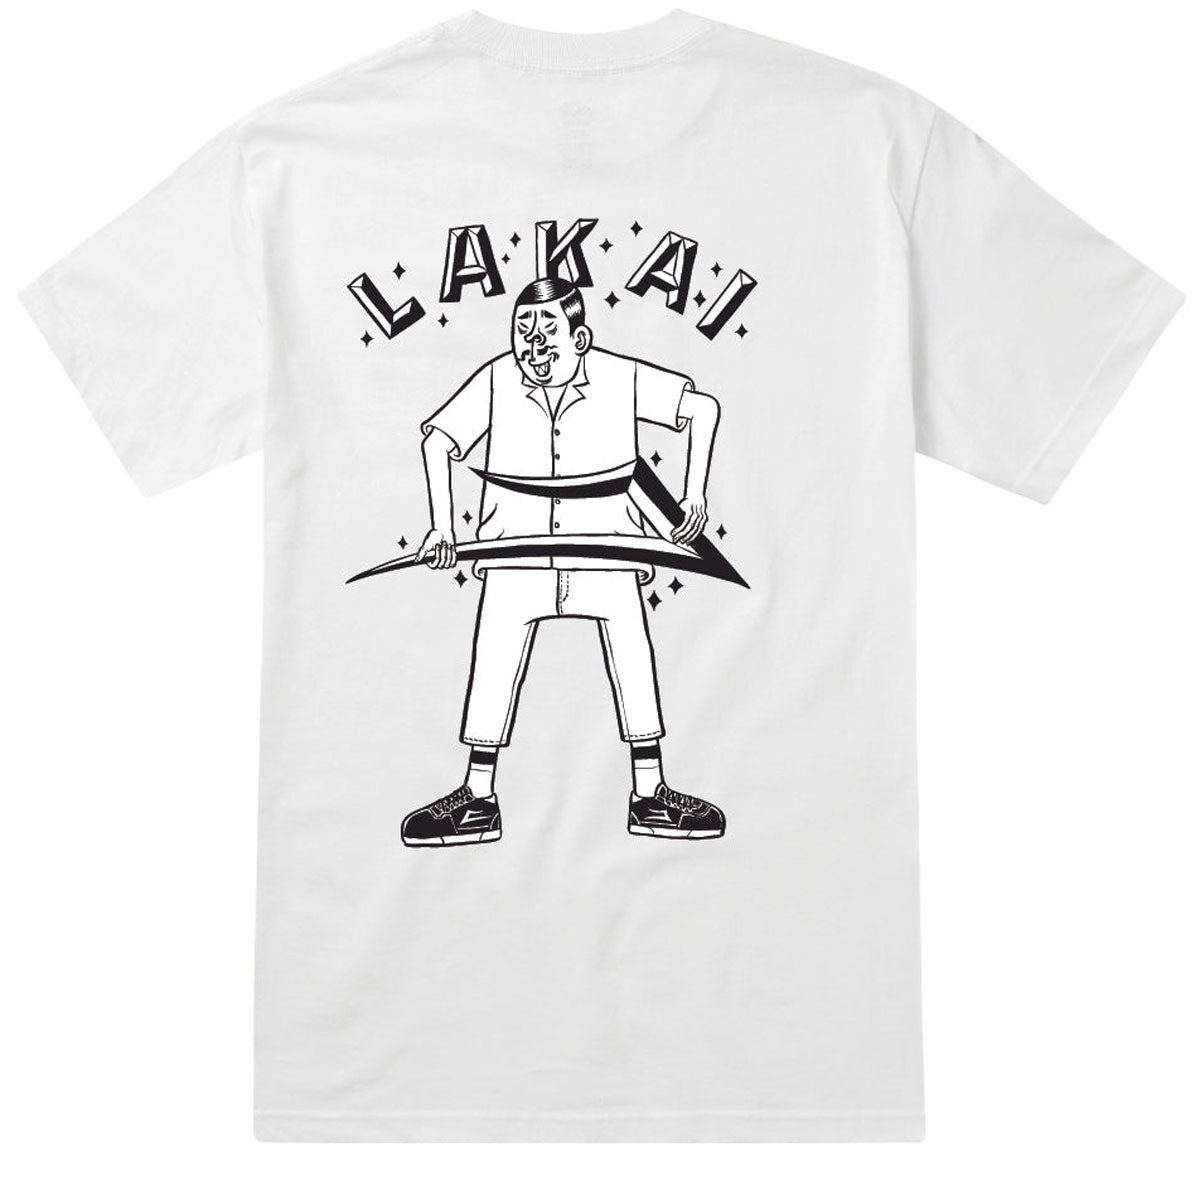 Lakai Esow Character T-Shirt - White image 1